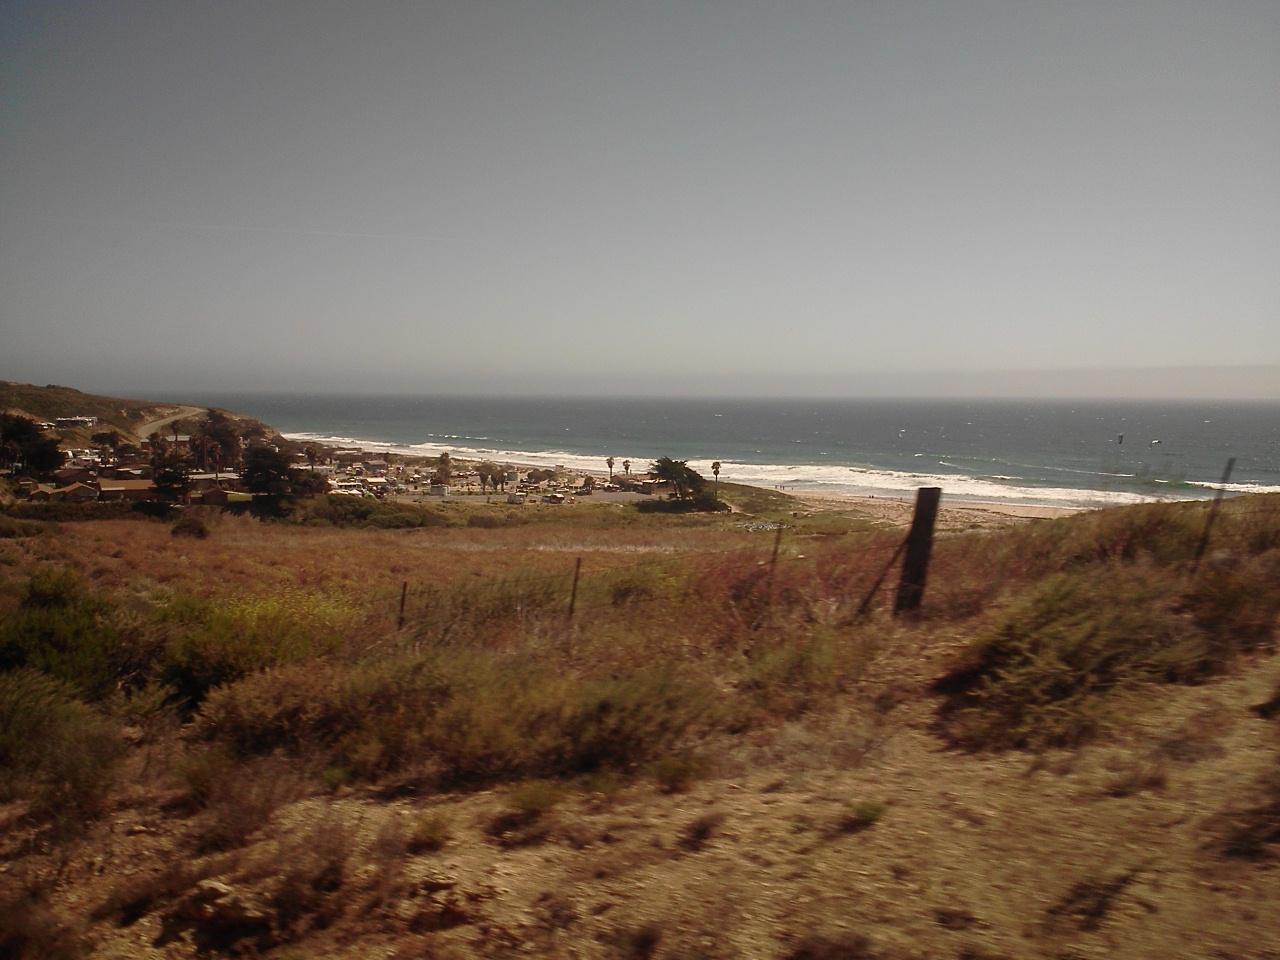 Not a bad view from Amtrak, near Santa Barbara